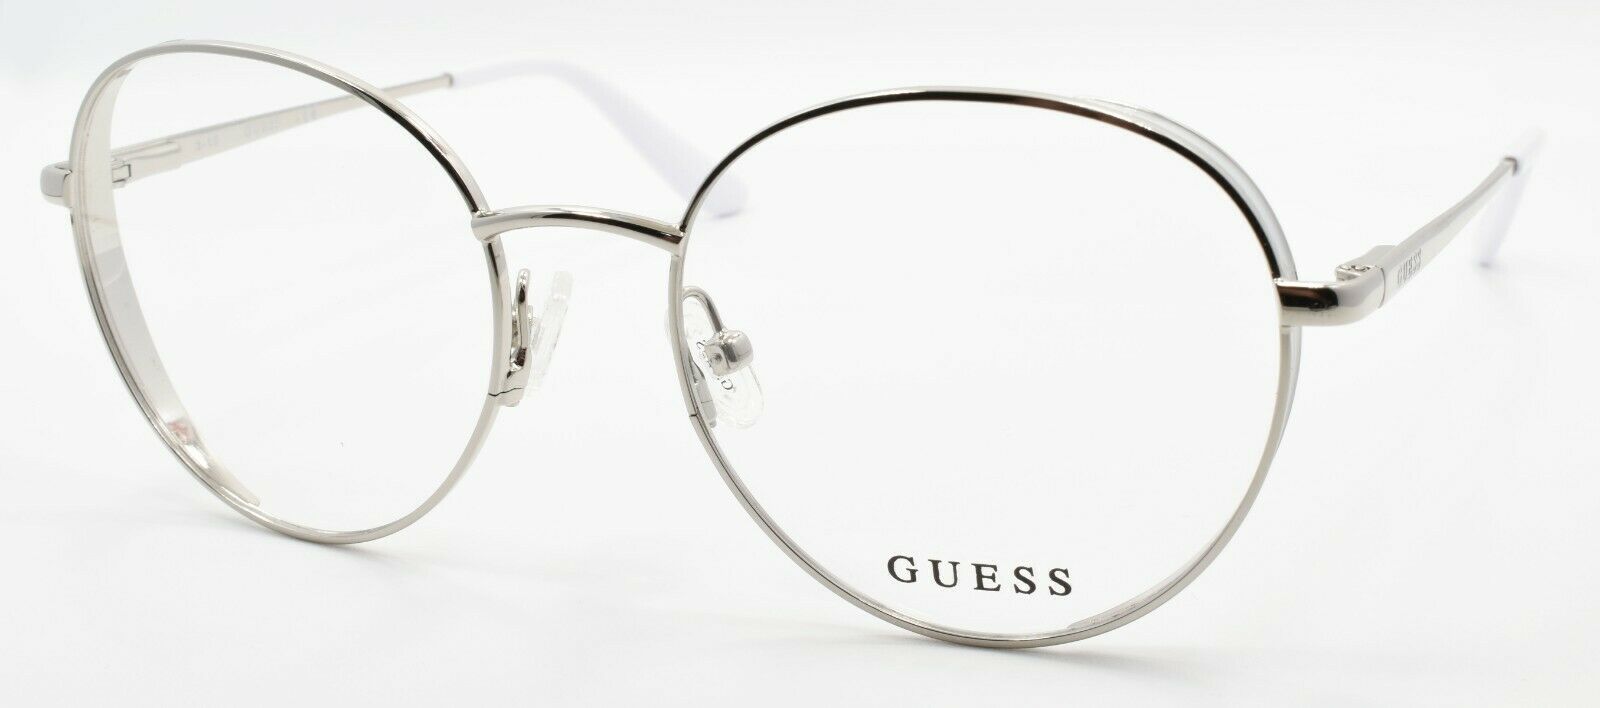 1-GUESS GU2700 010 Women's Eyeglasses Frames Round 52-18-140 Shiny Light Nickeltin-889214012241-IKSpecs